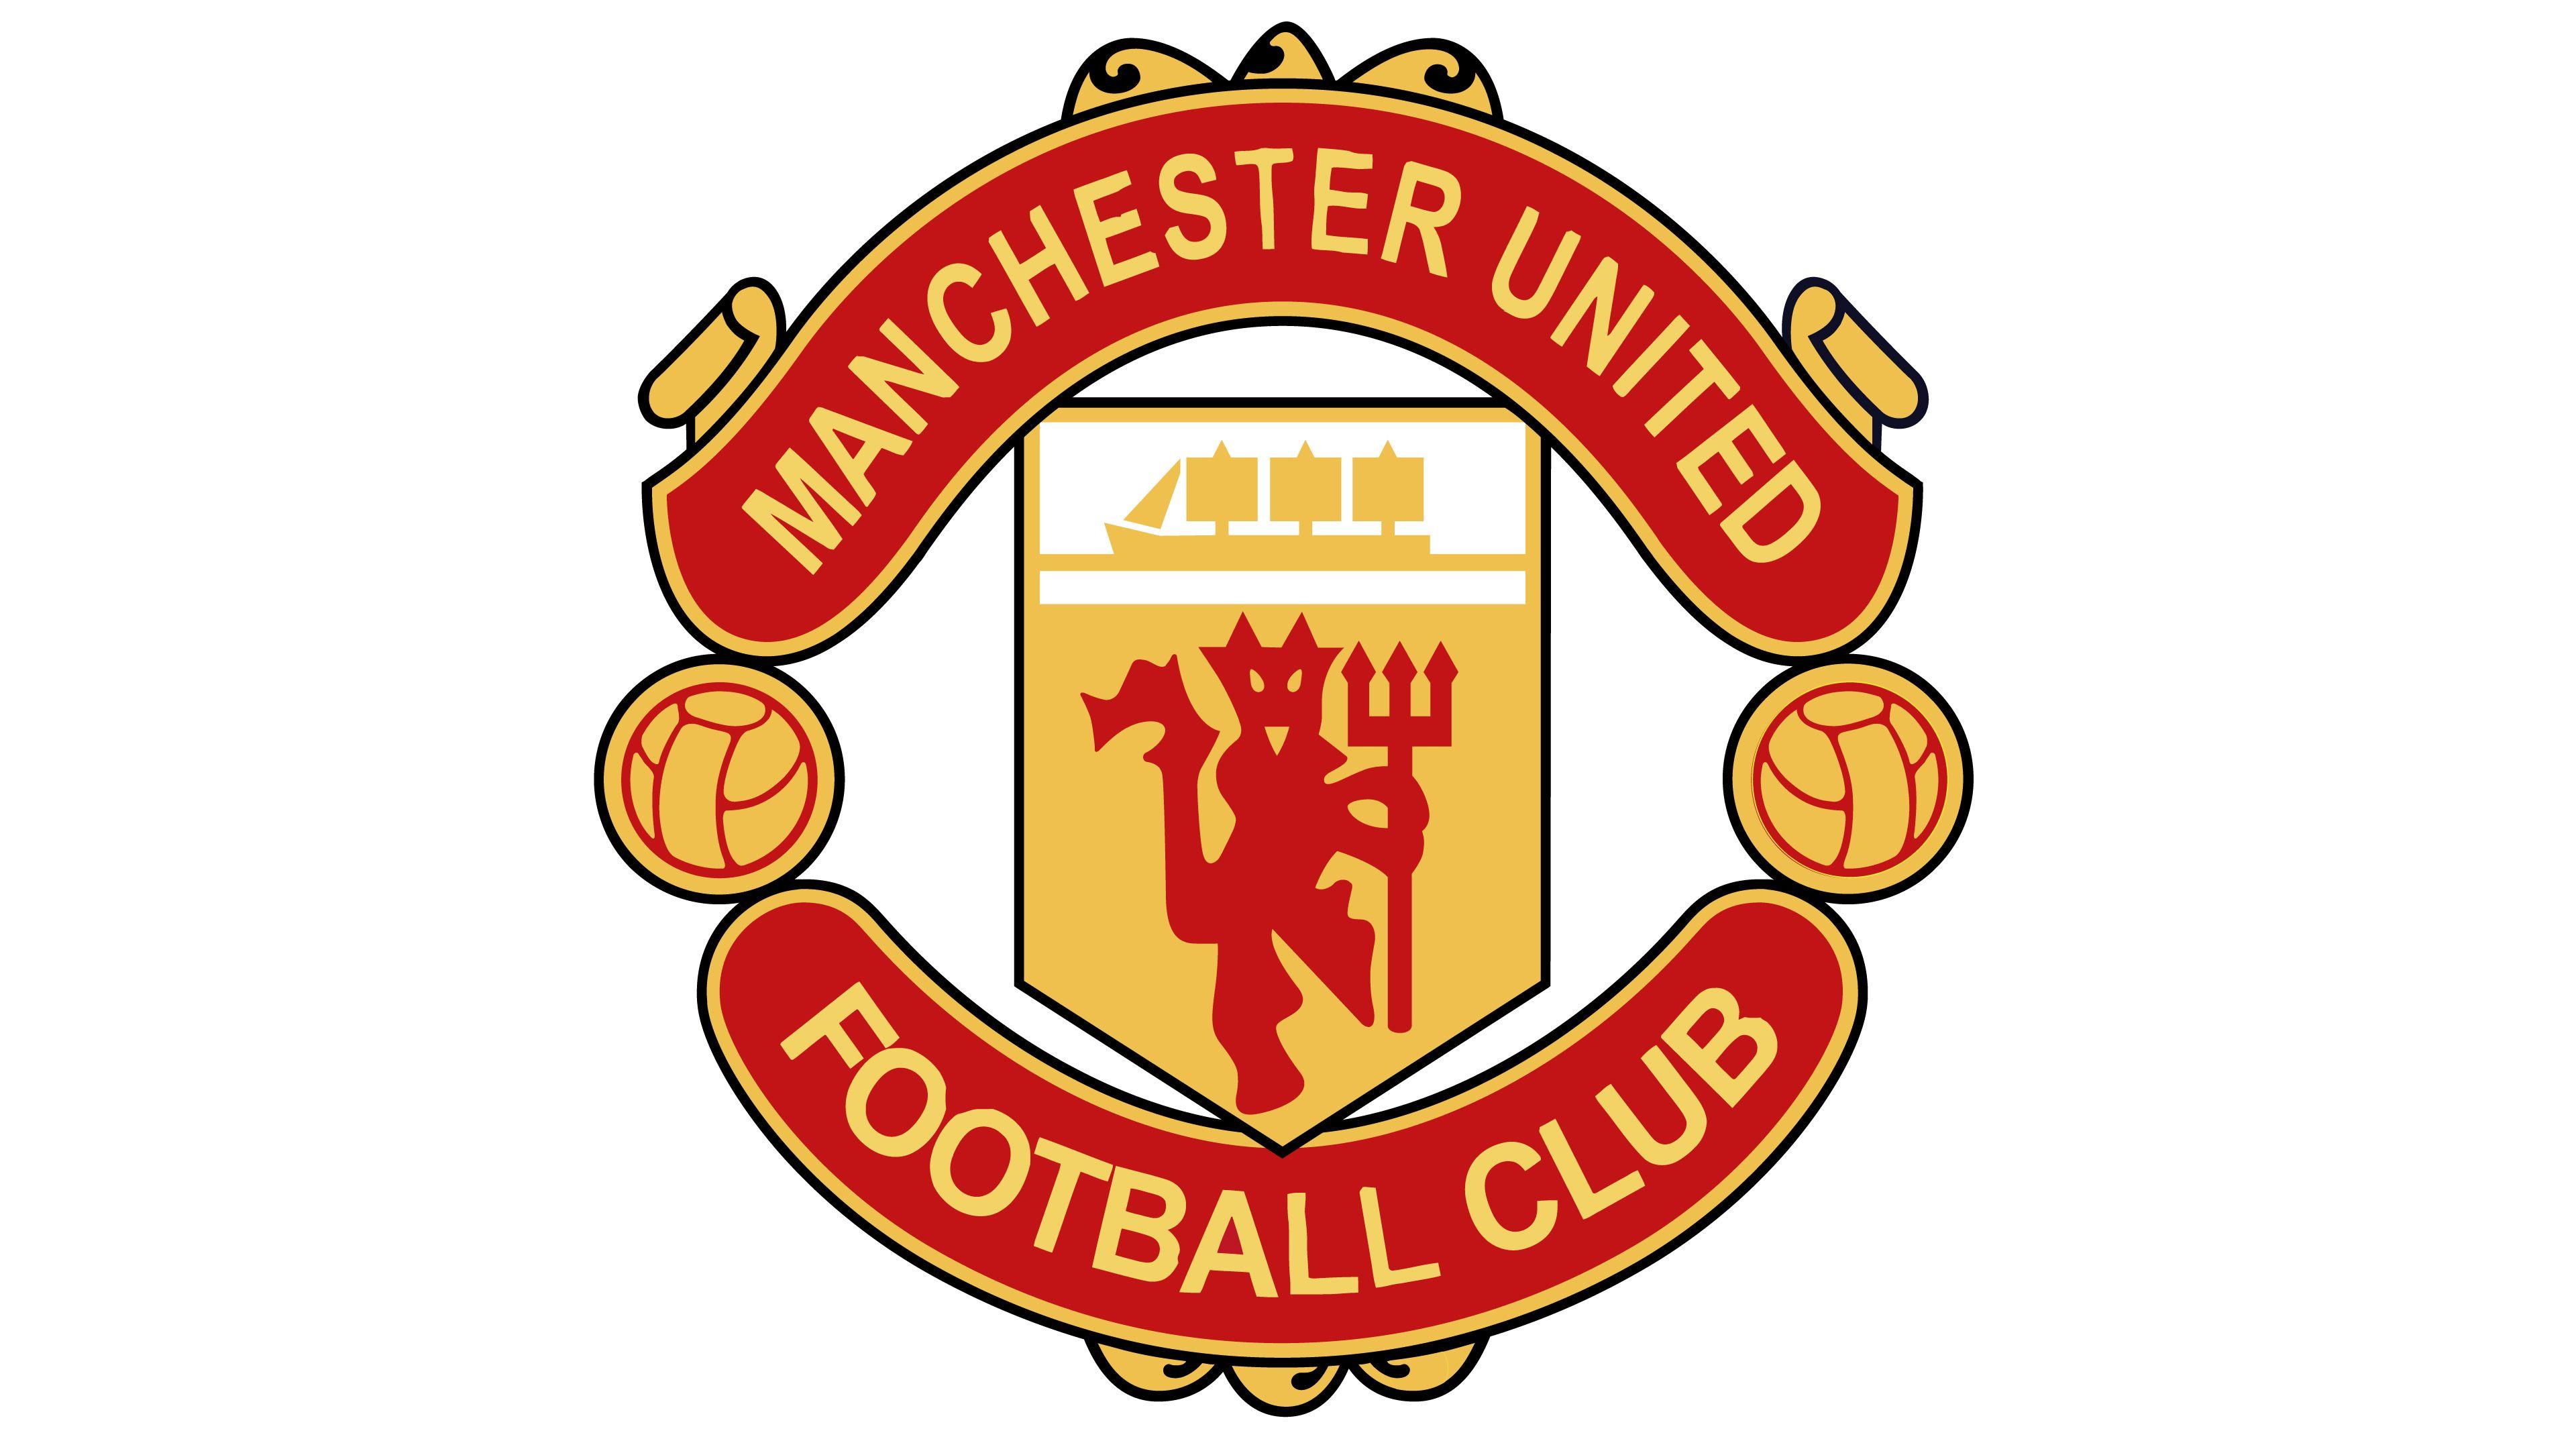 Manchester Logo - Manchester United logo - Interesting History Team Name and emblem